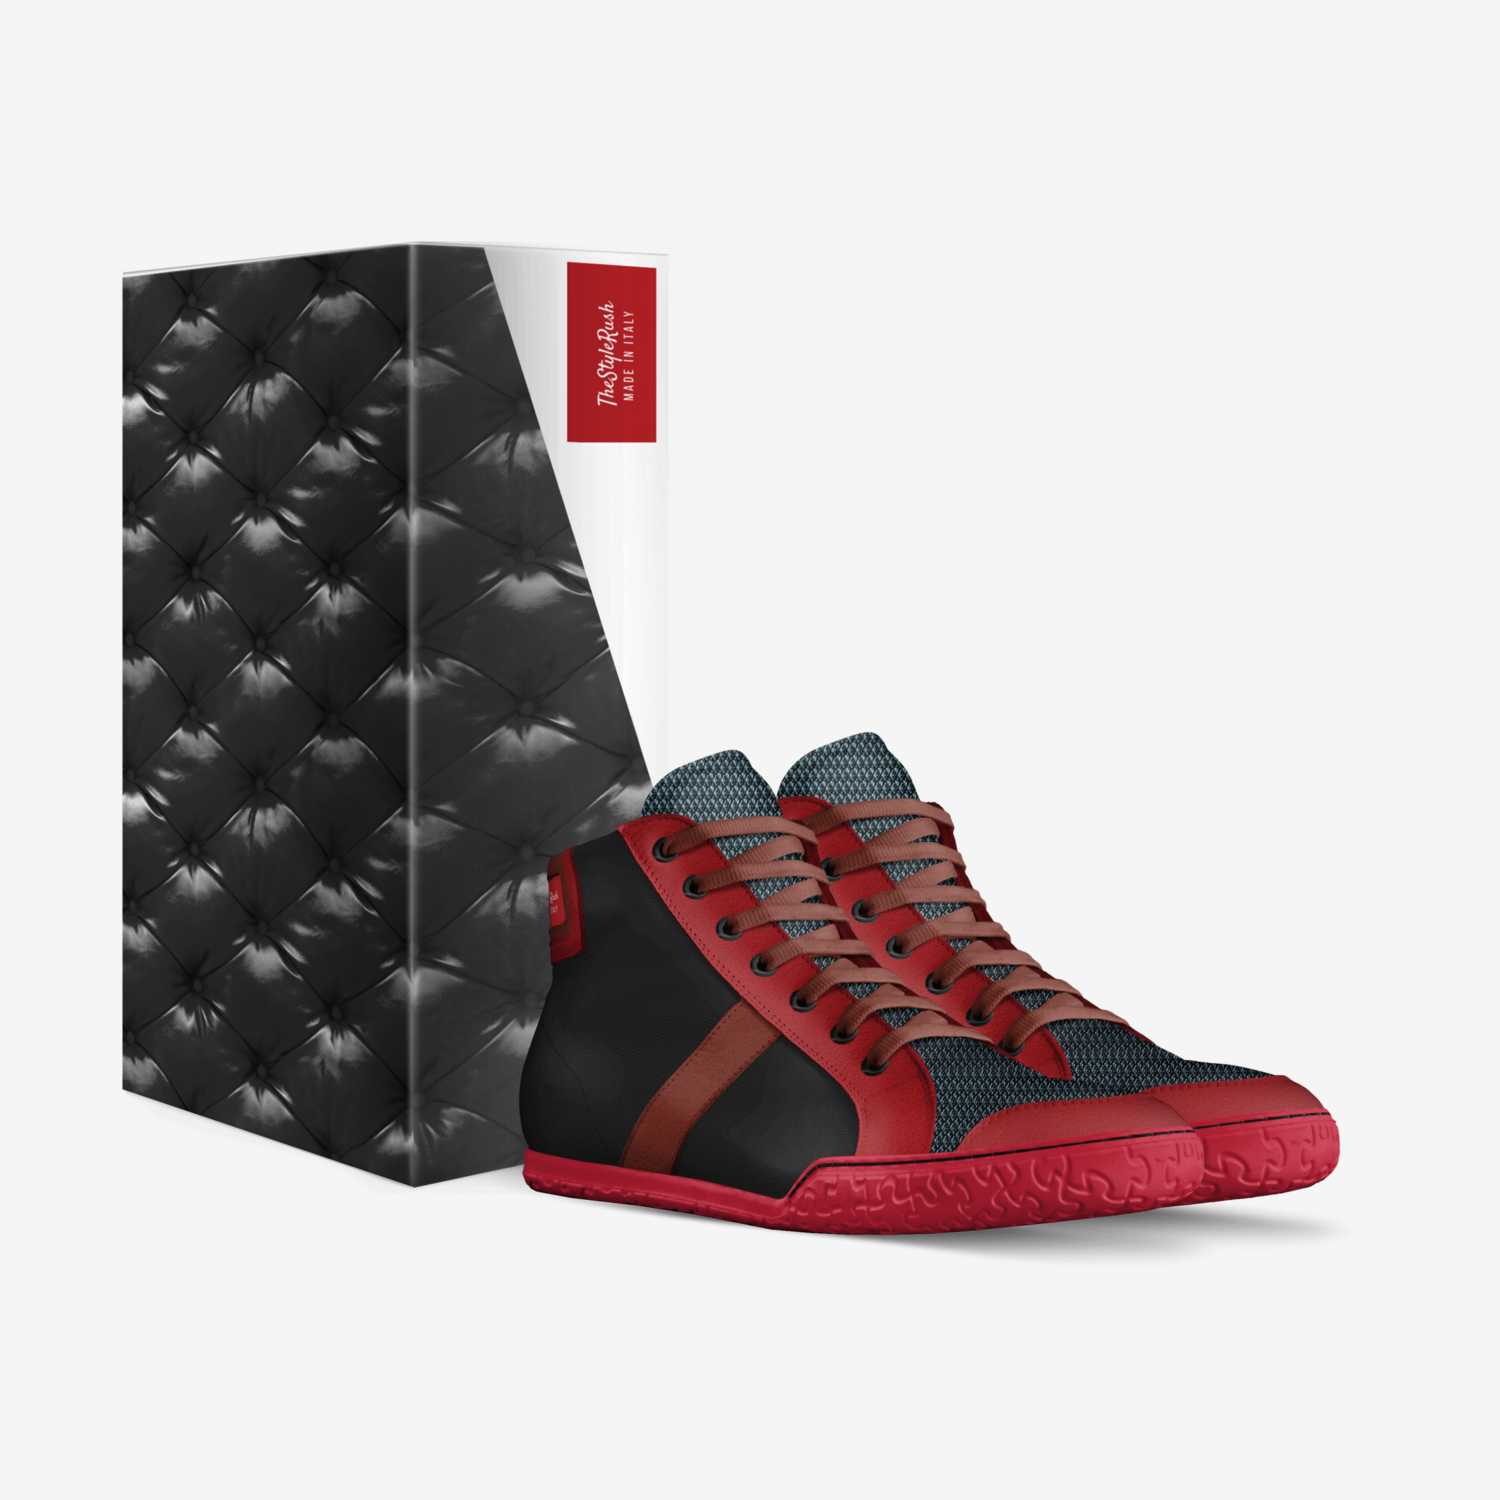 Pasha custom made in Italy shoes by John Koly | Box view